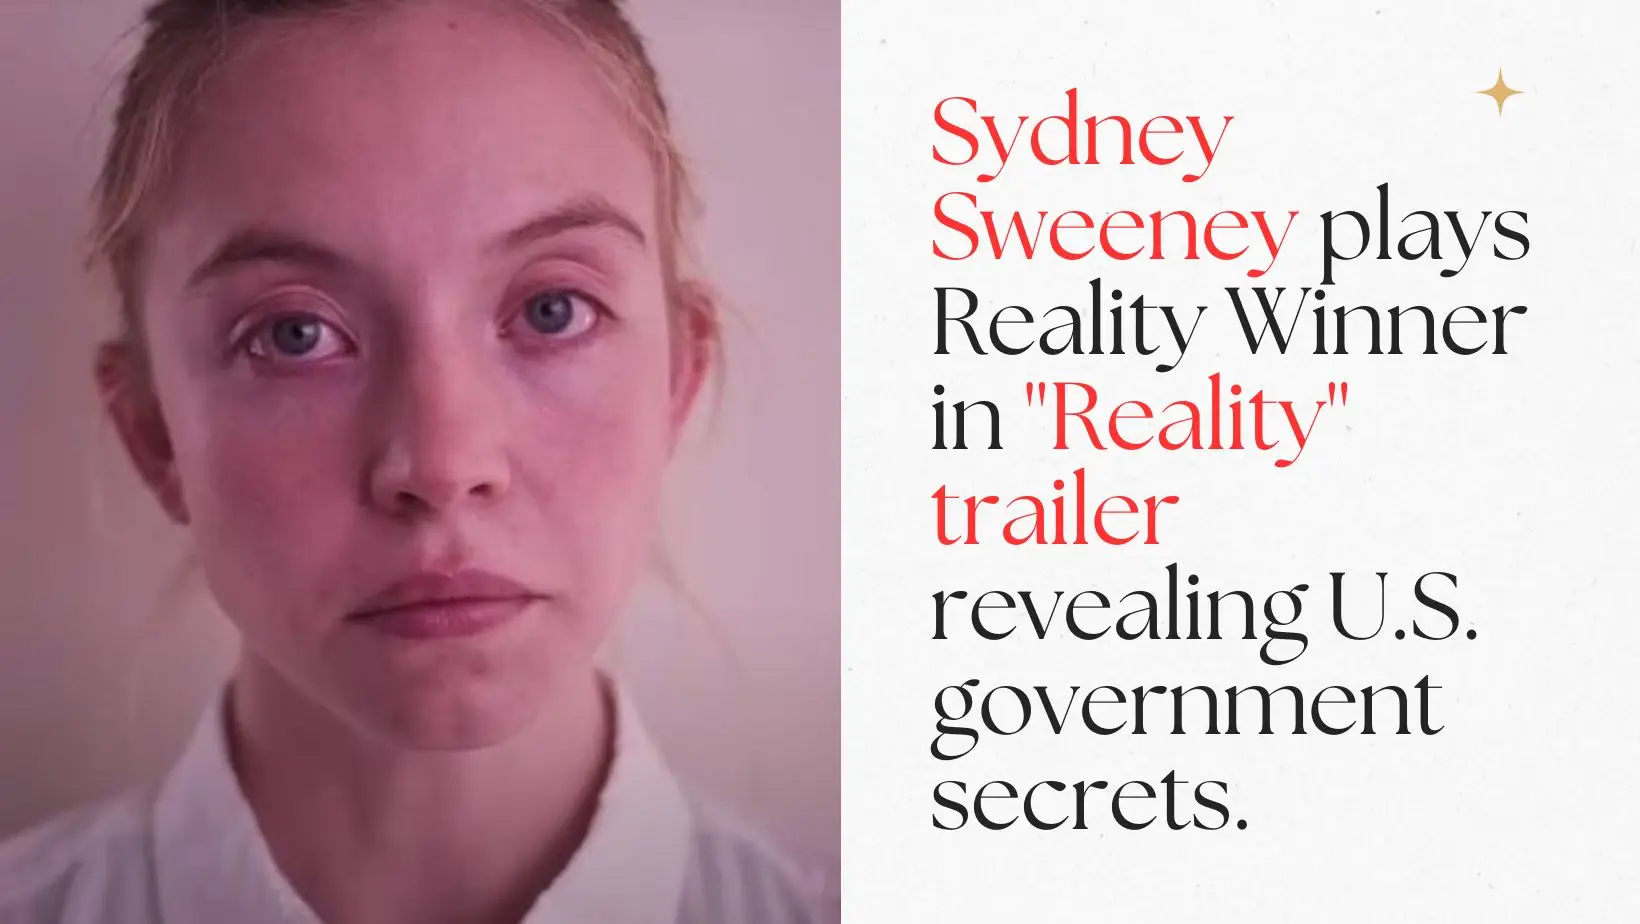 Sydney Sweeney plays Reality Winner in "Reality" trailer revealing U.S. government secrets